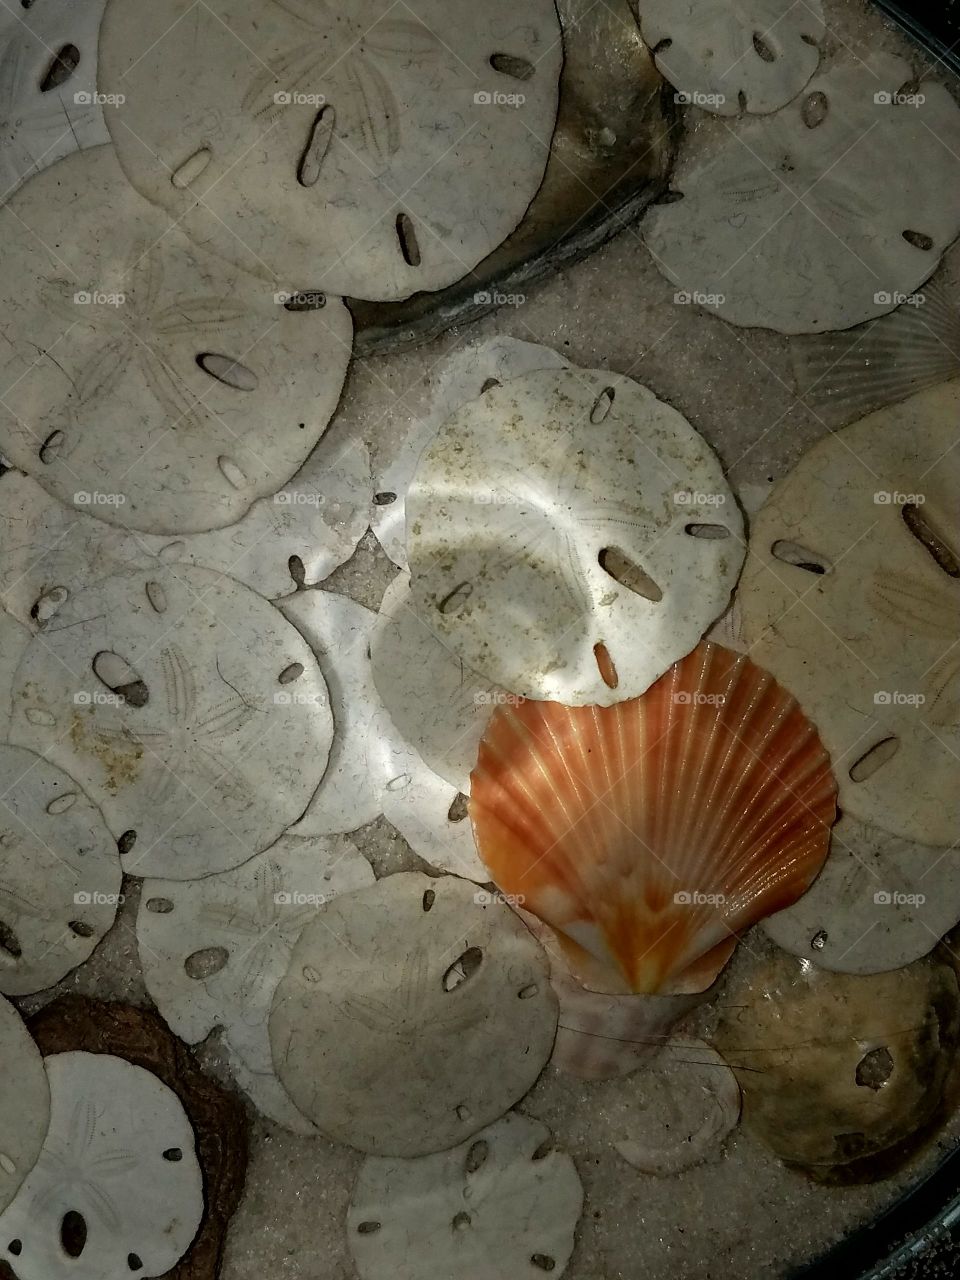 SeaShells